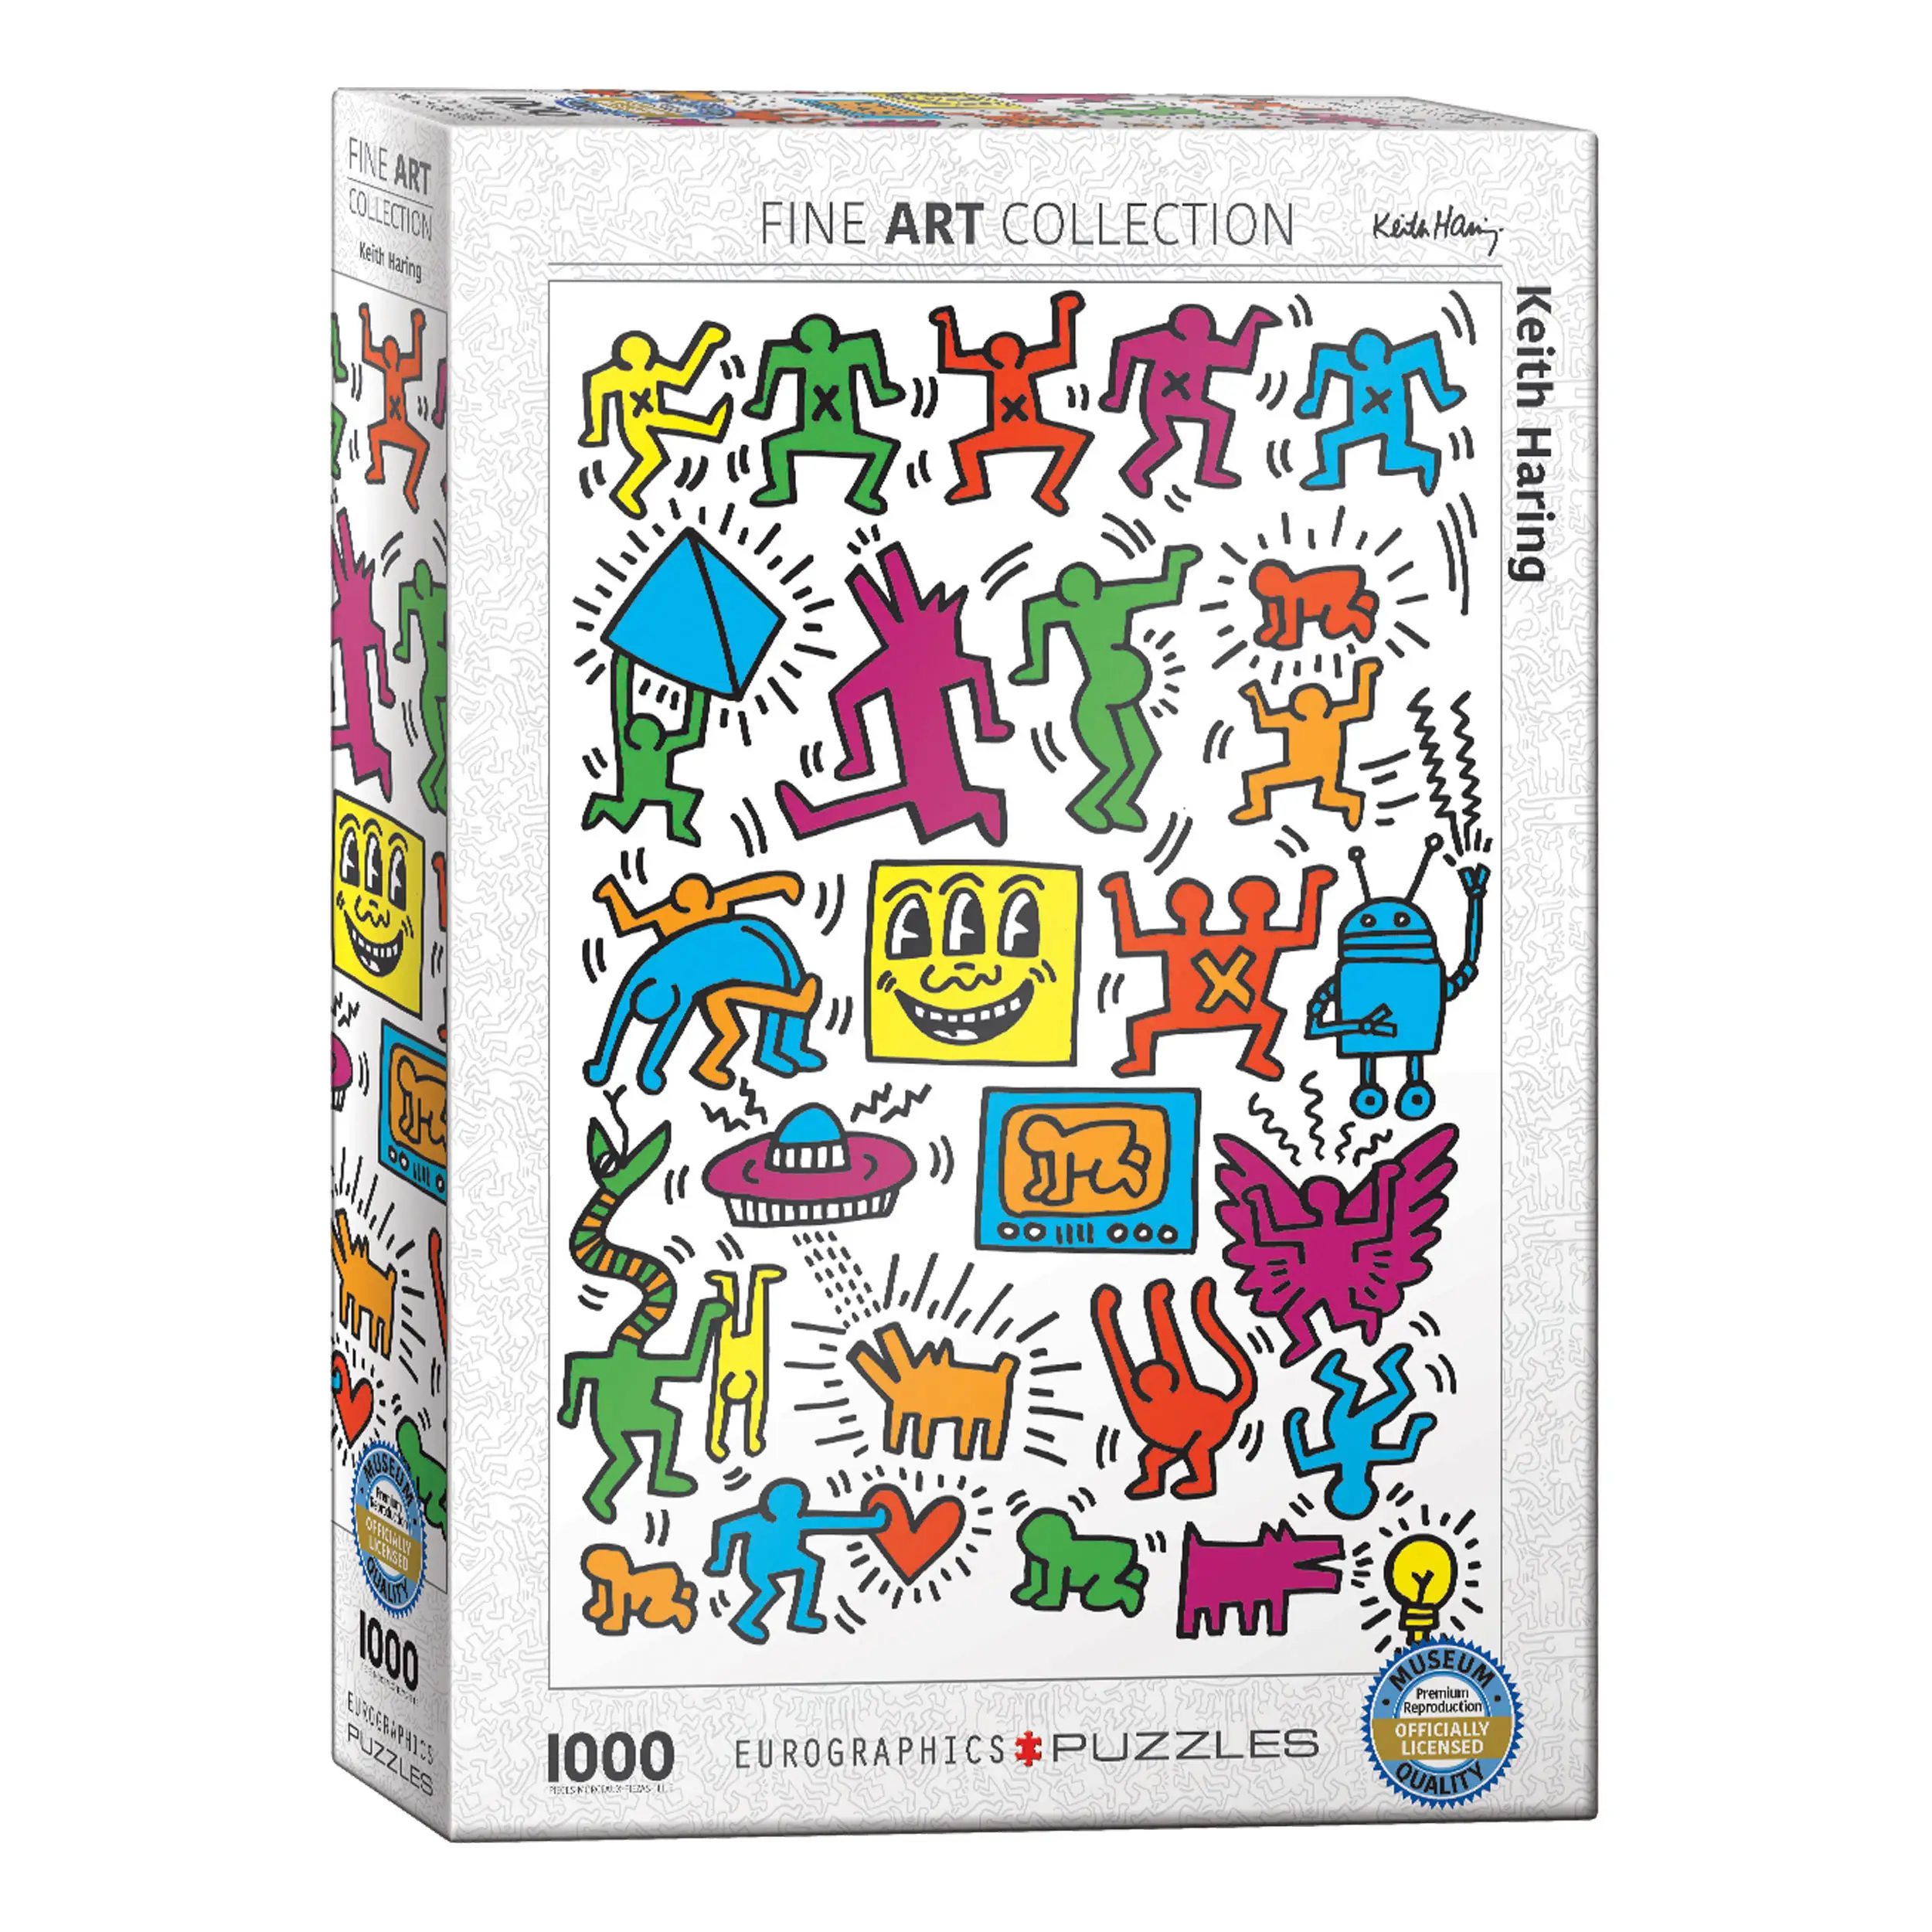 Puzzle Collage von Keith Haring